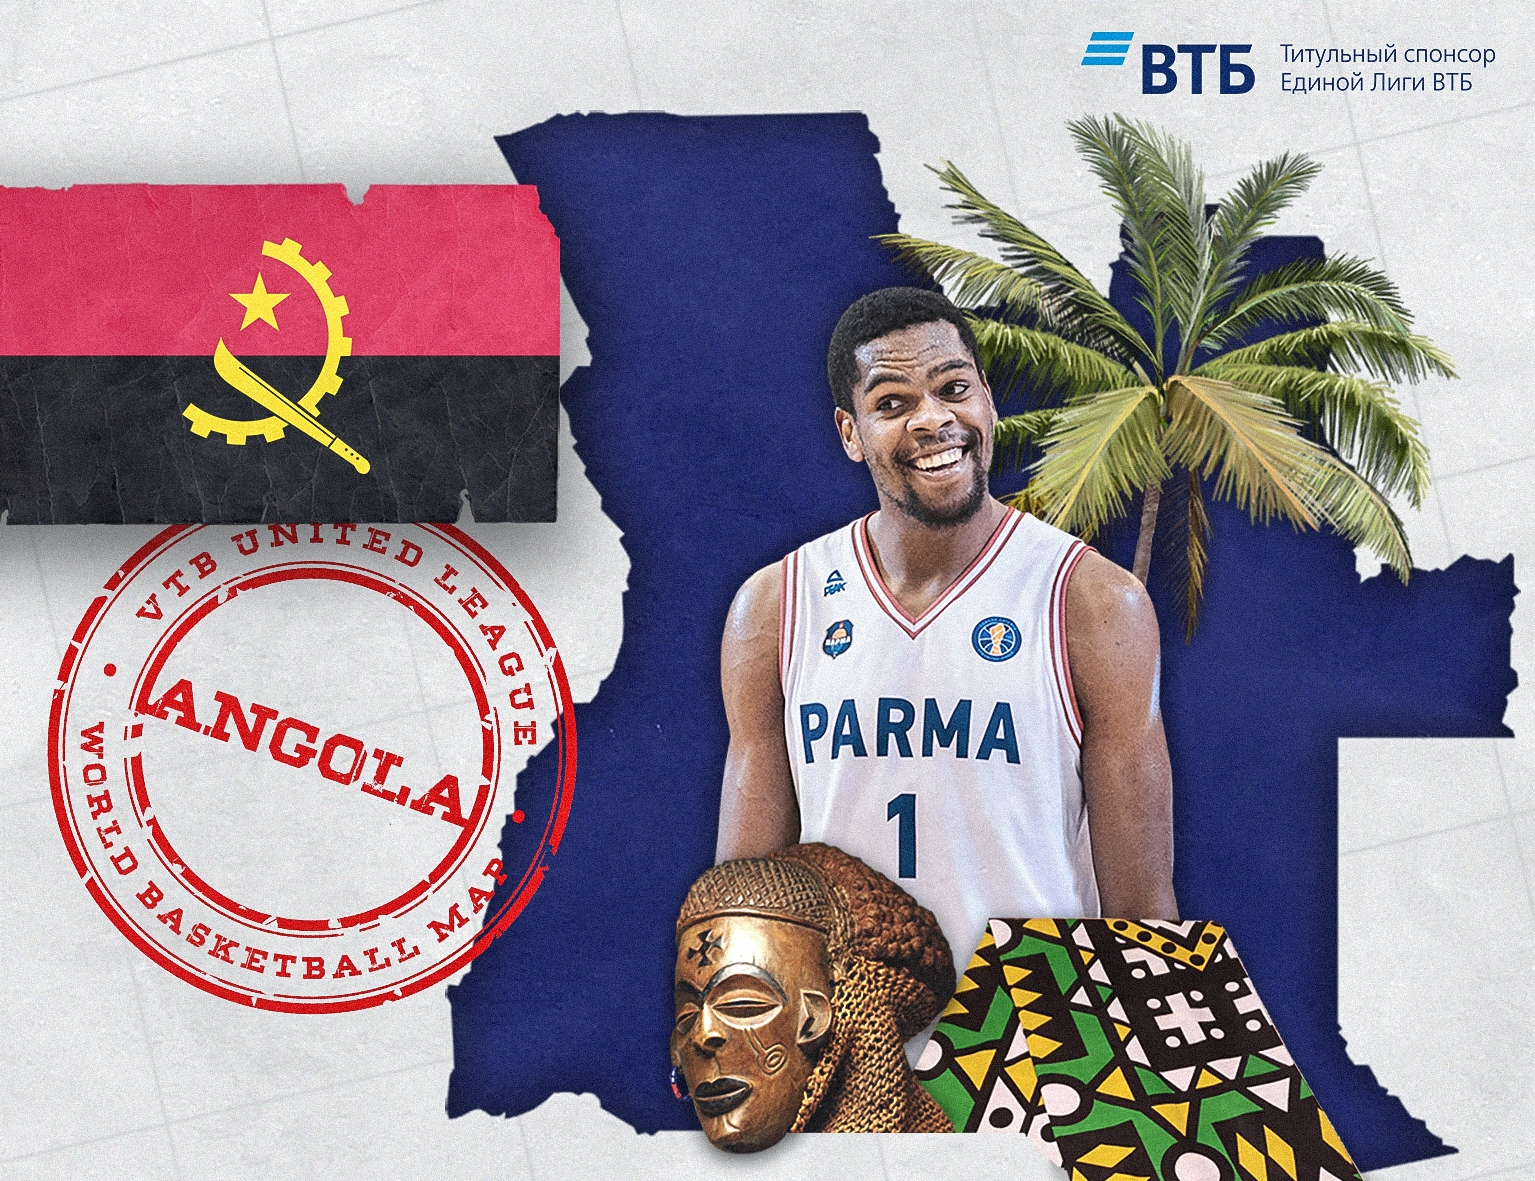 World basketball map: Angola